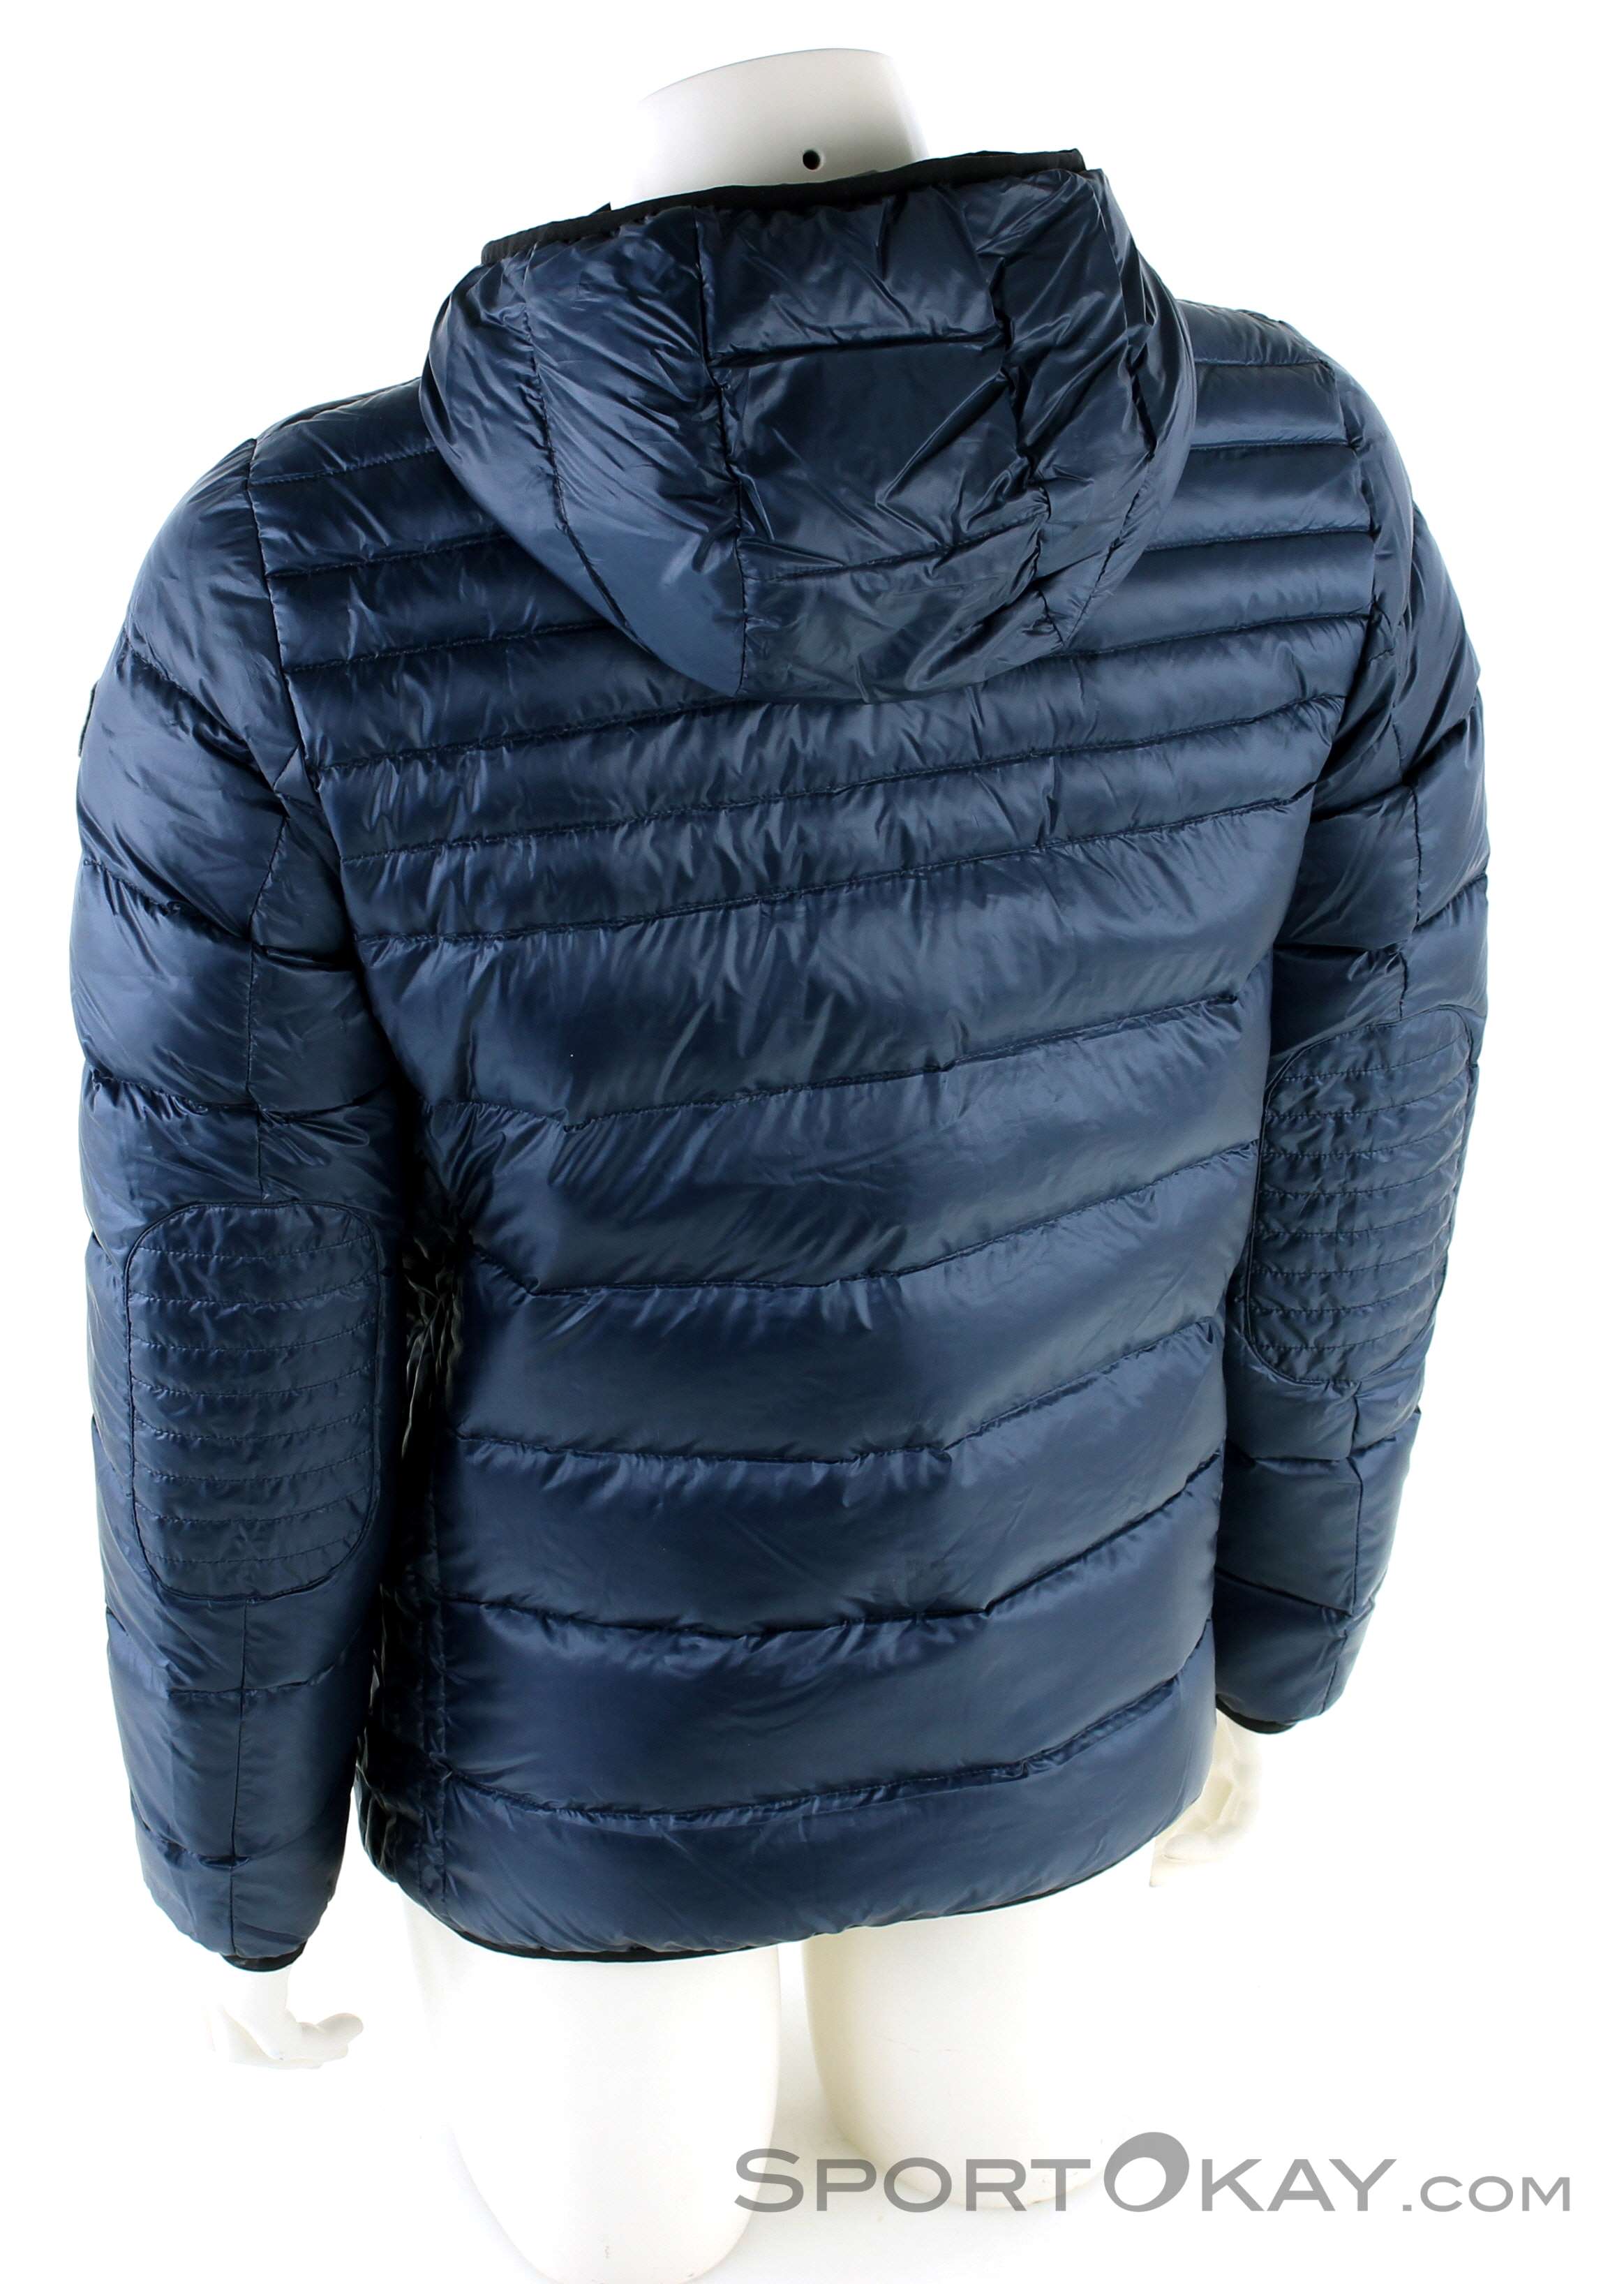 Dolomite MJ Mens Leisure Jacket - Jackets - Leisure Clothing - Fashion - All